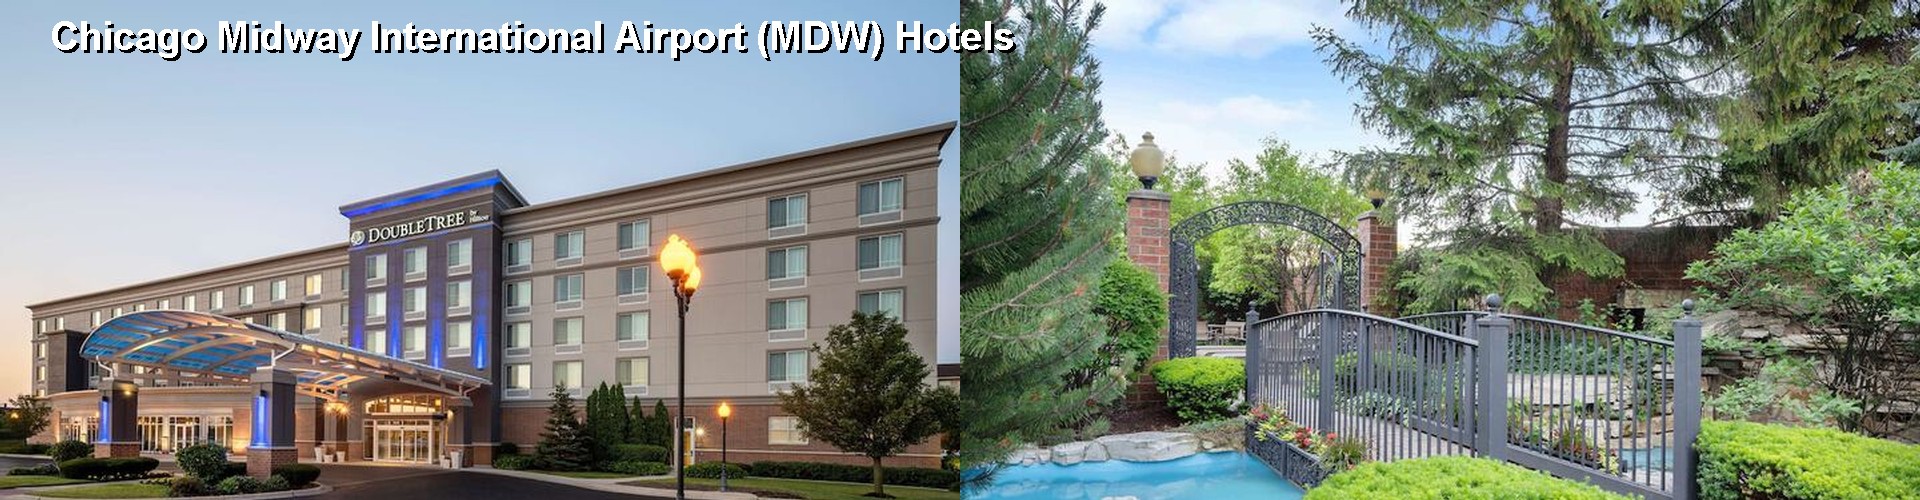 5 Best Hotels near Chicago Midway International Airport (MDW)